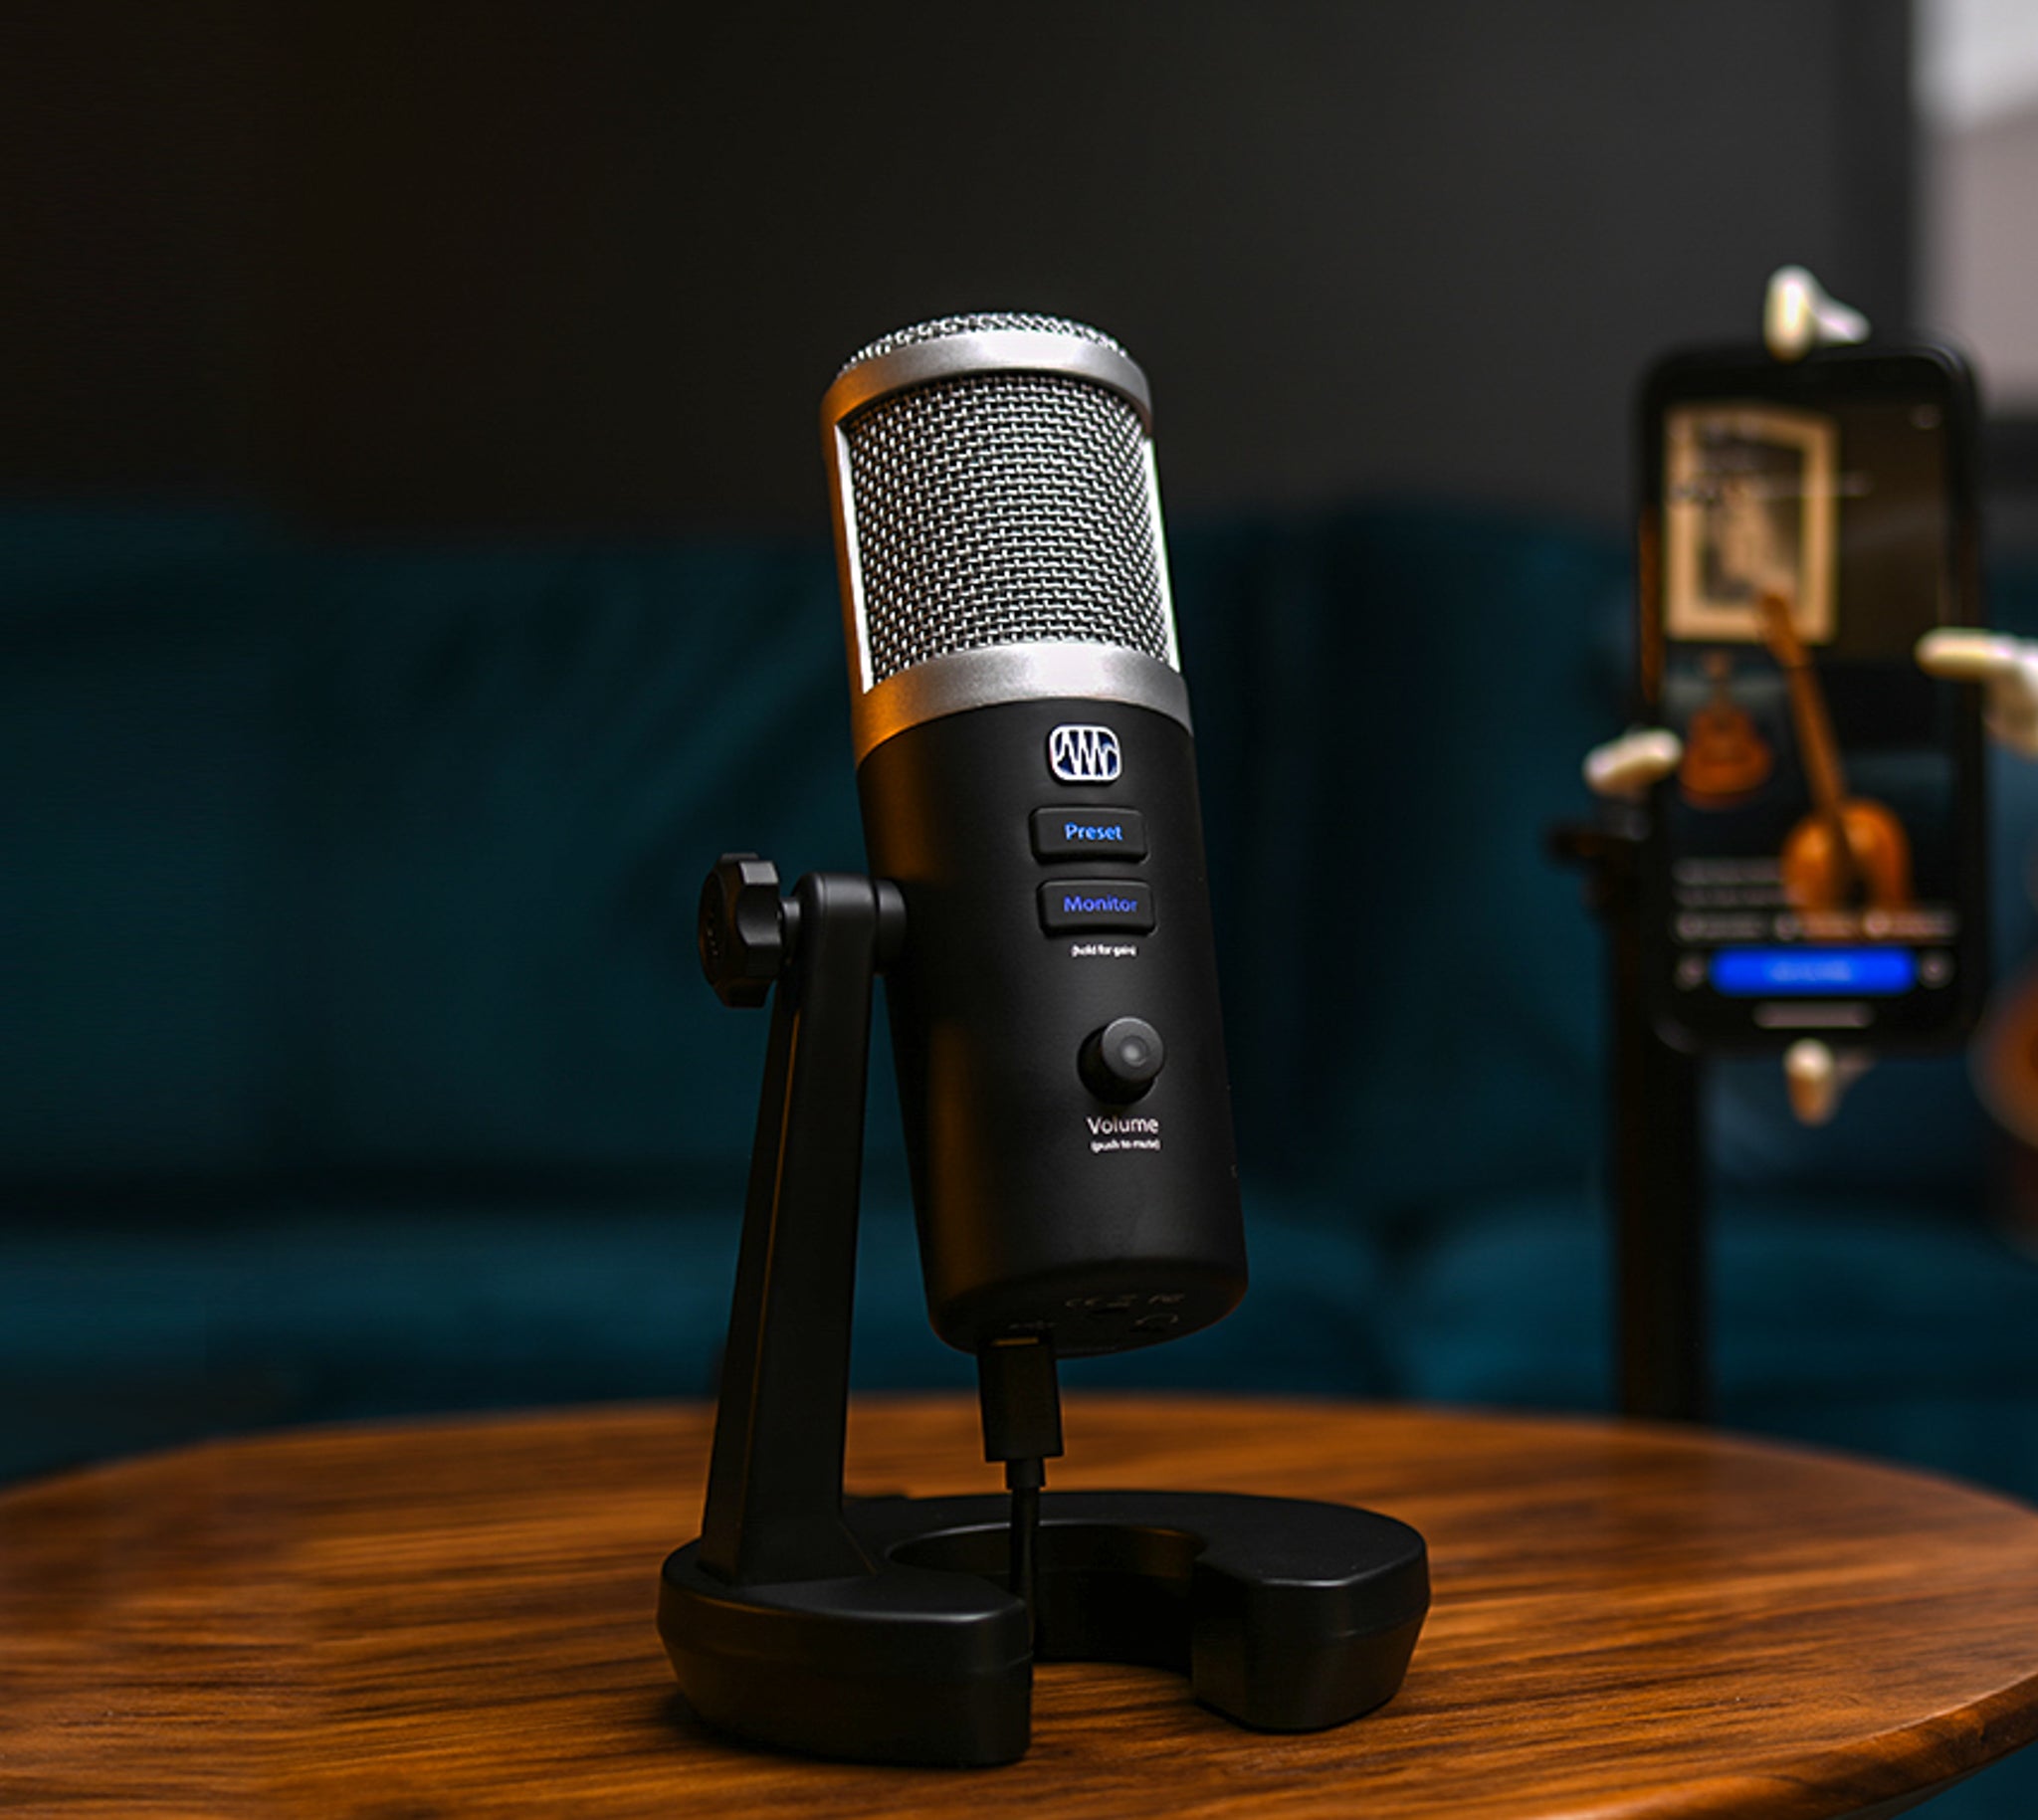 Presonus Revelator Professional USB Microphone for Podcasting, Live Streaming & More